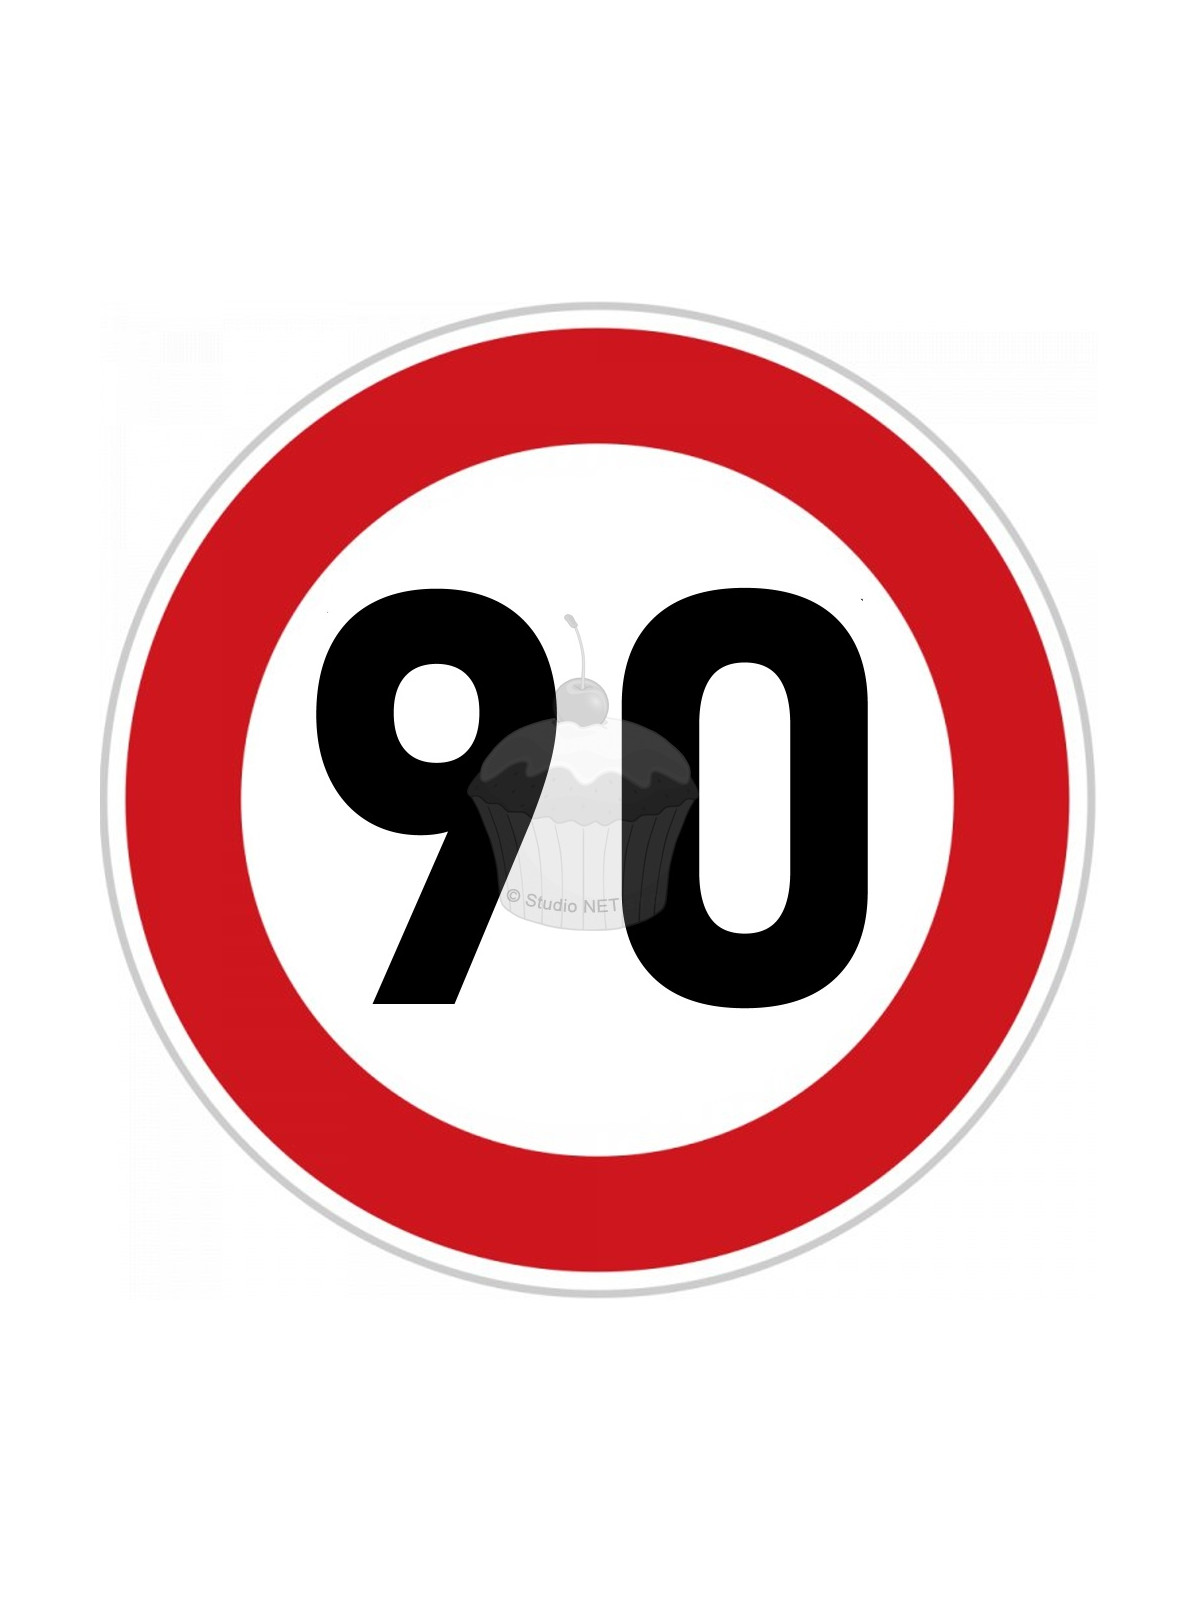 Edible paper "90th Birthday" ban sign A4